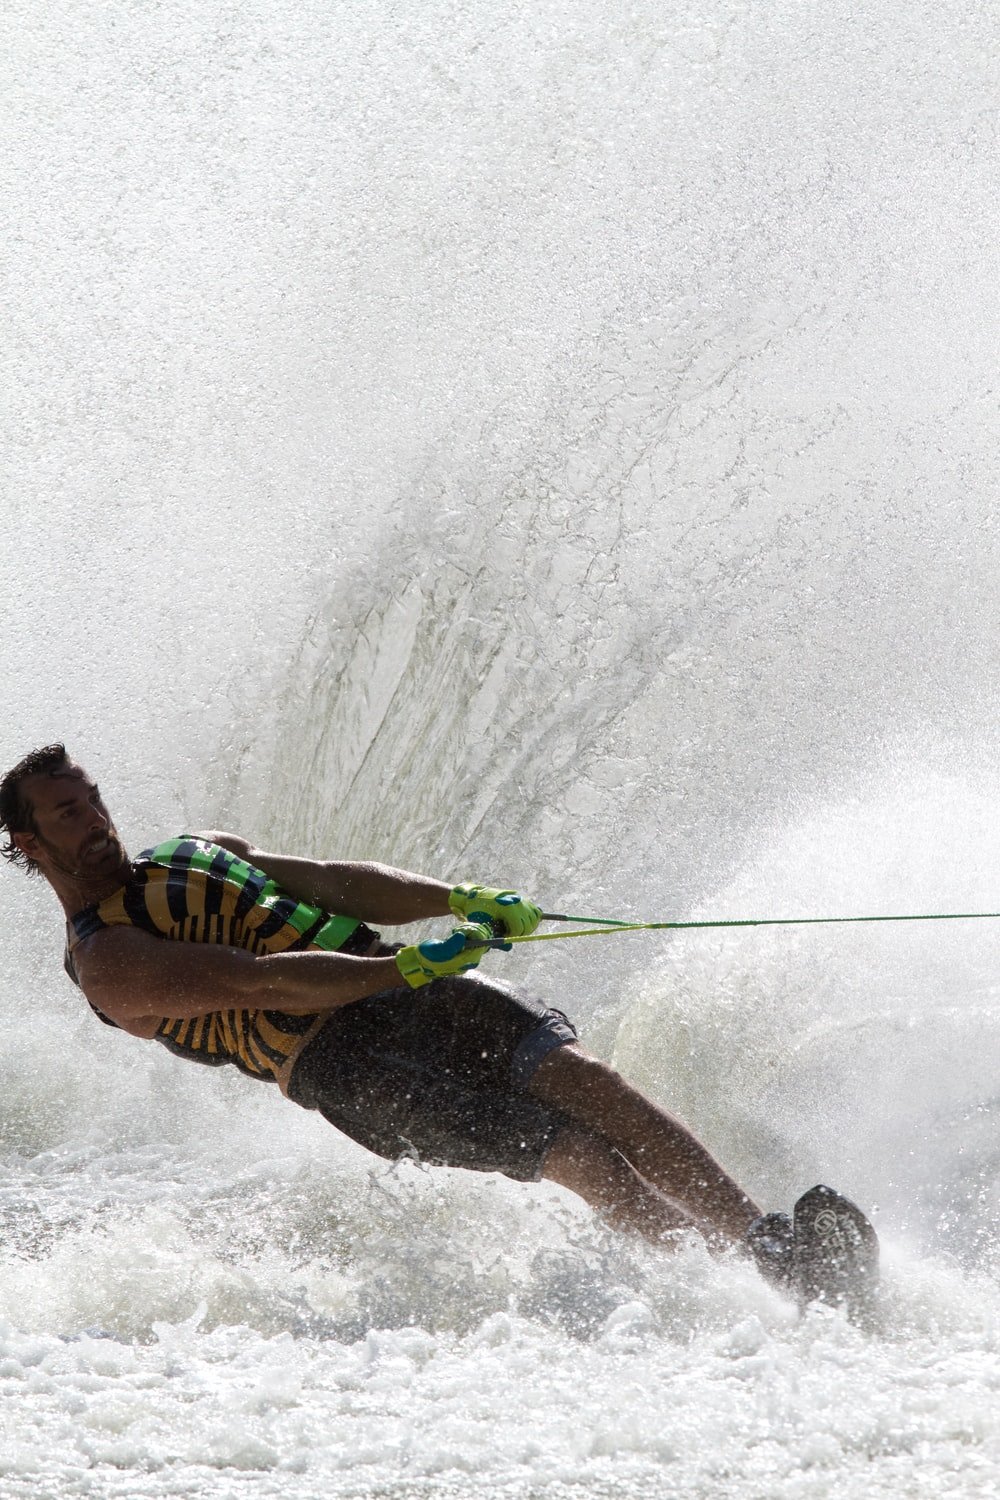 Water Ski Picture. Download Free Image